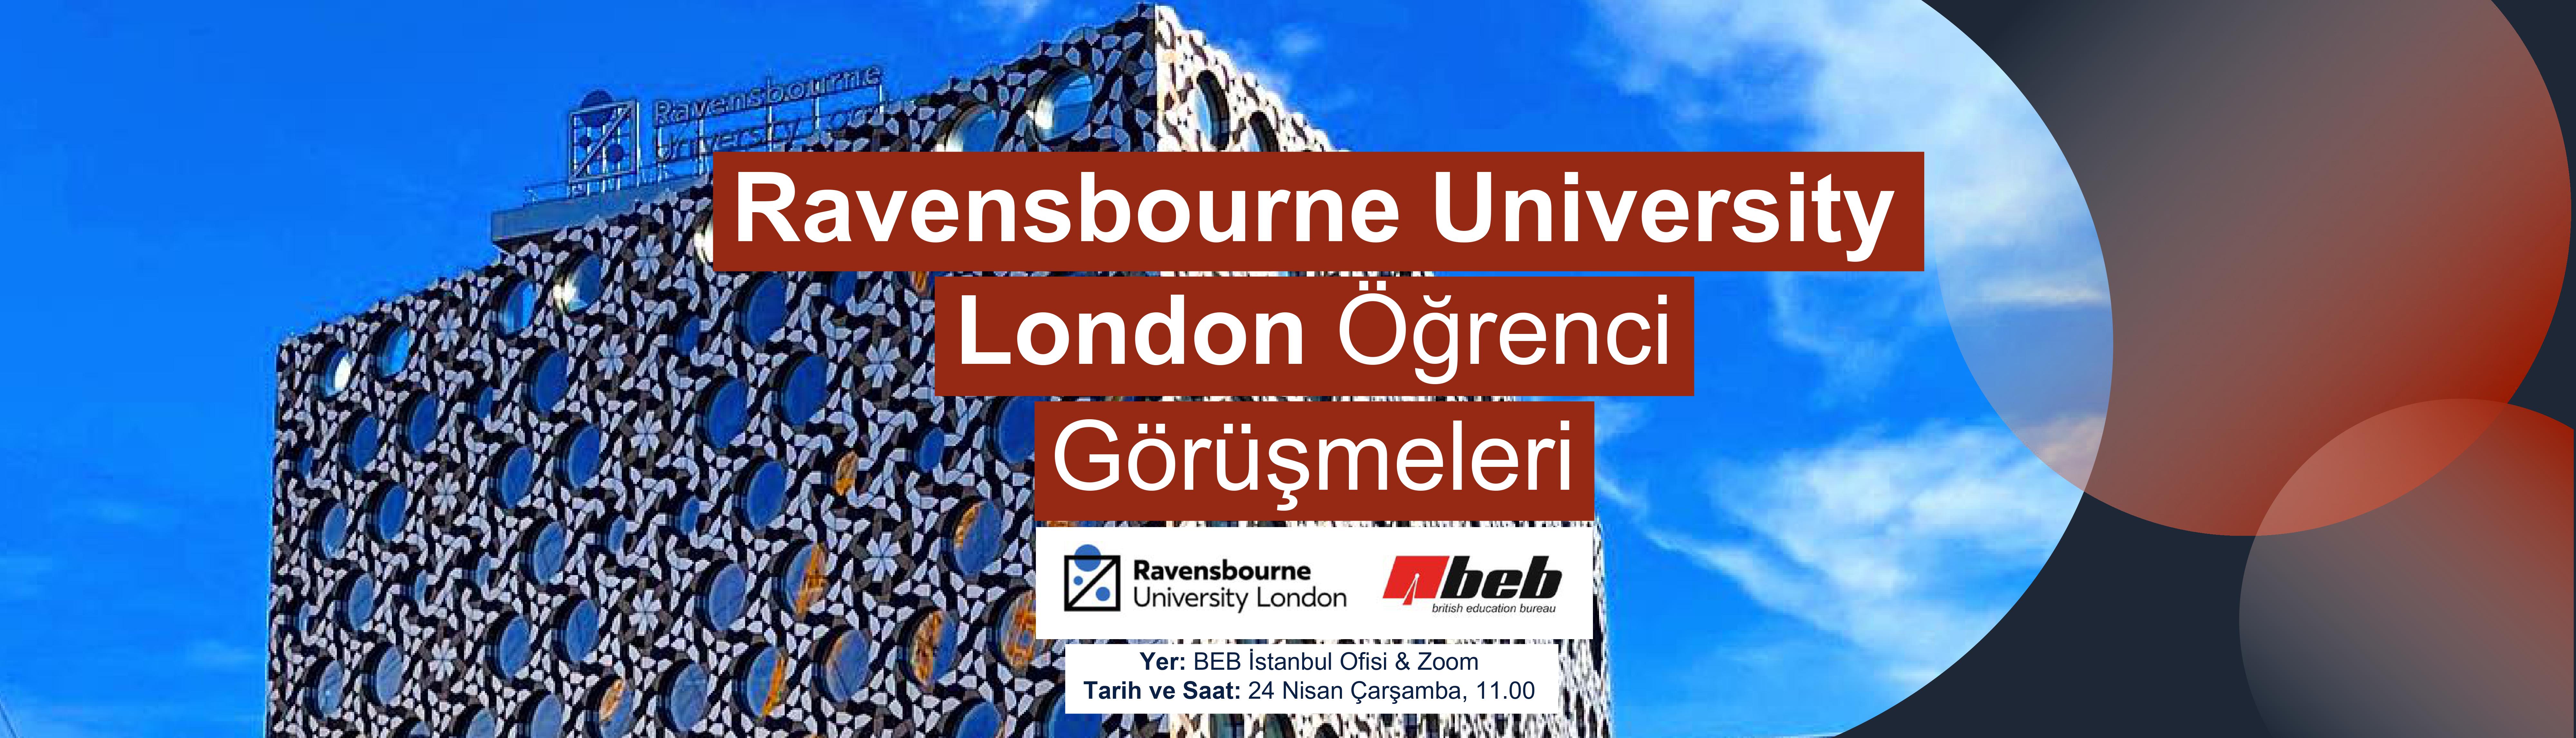 Ravensbourne-University-London-BEB-Istanbul-Ofisi-Ogrenci-Gorusmeleri